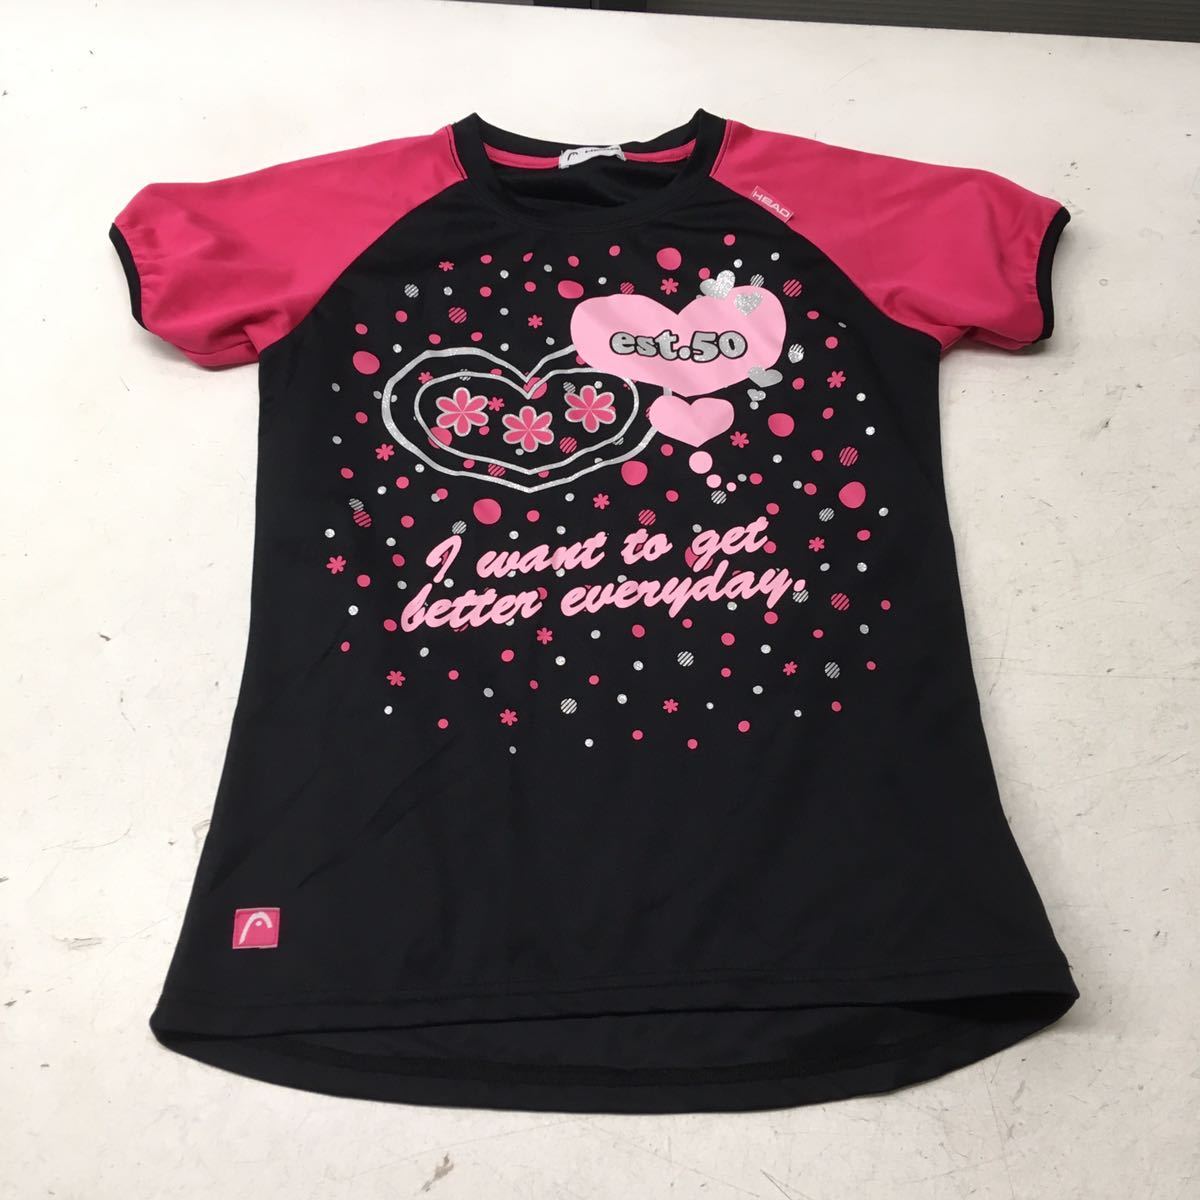  free shipping *HEAD head * short sleeves T-shirt tops * girl 160 black pink #41019sj65